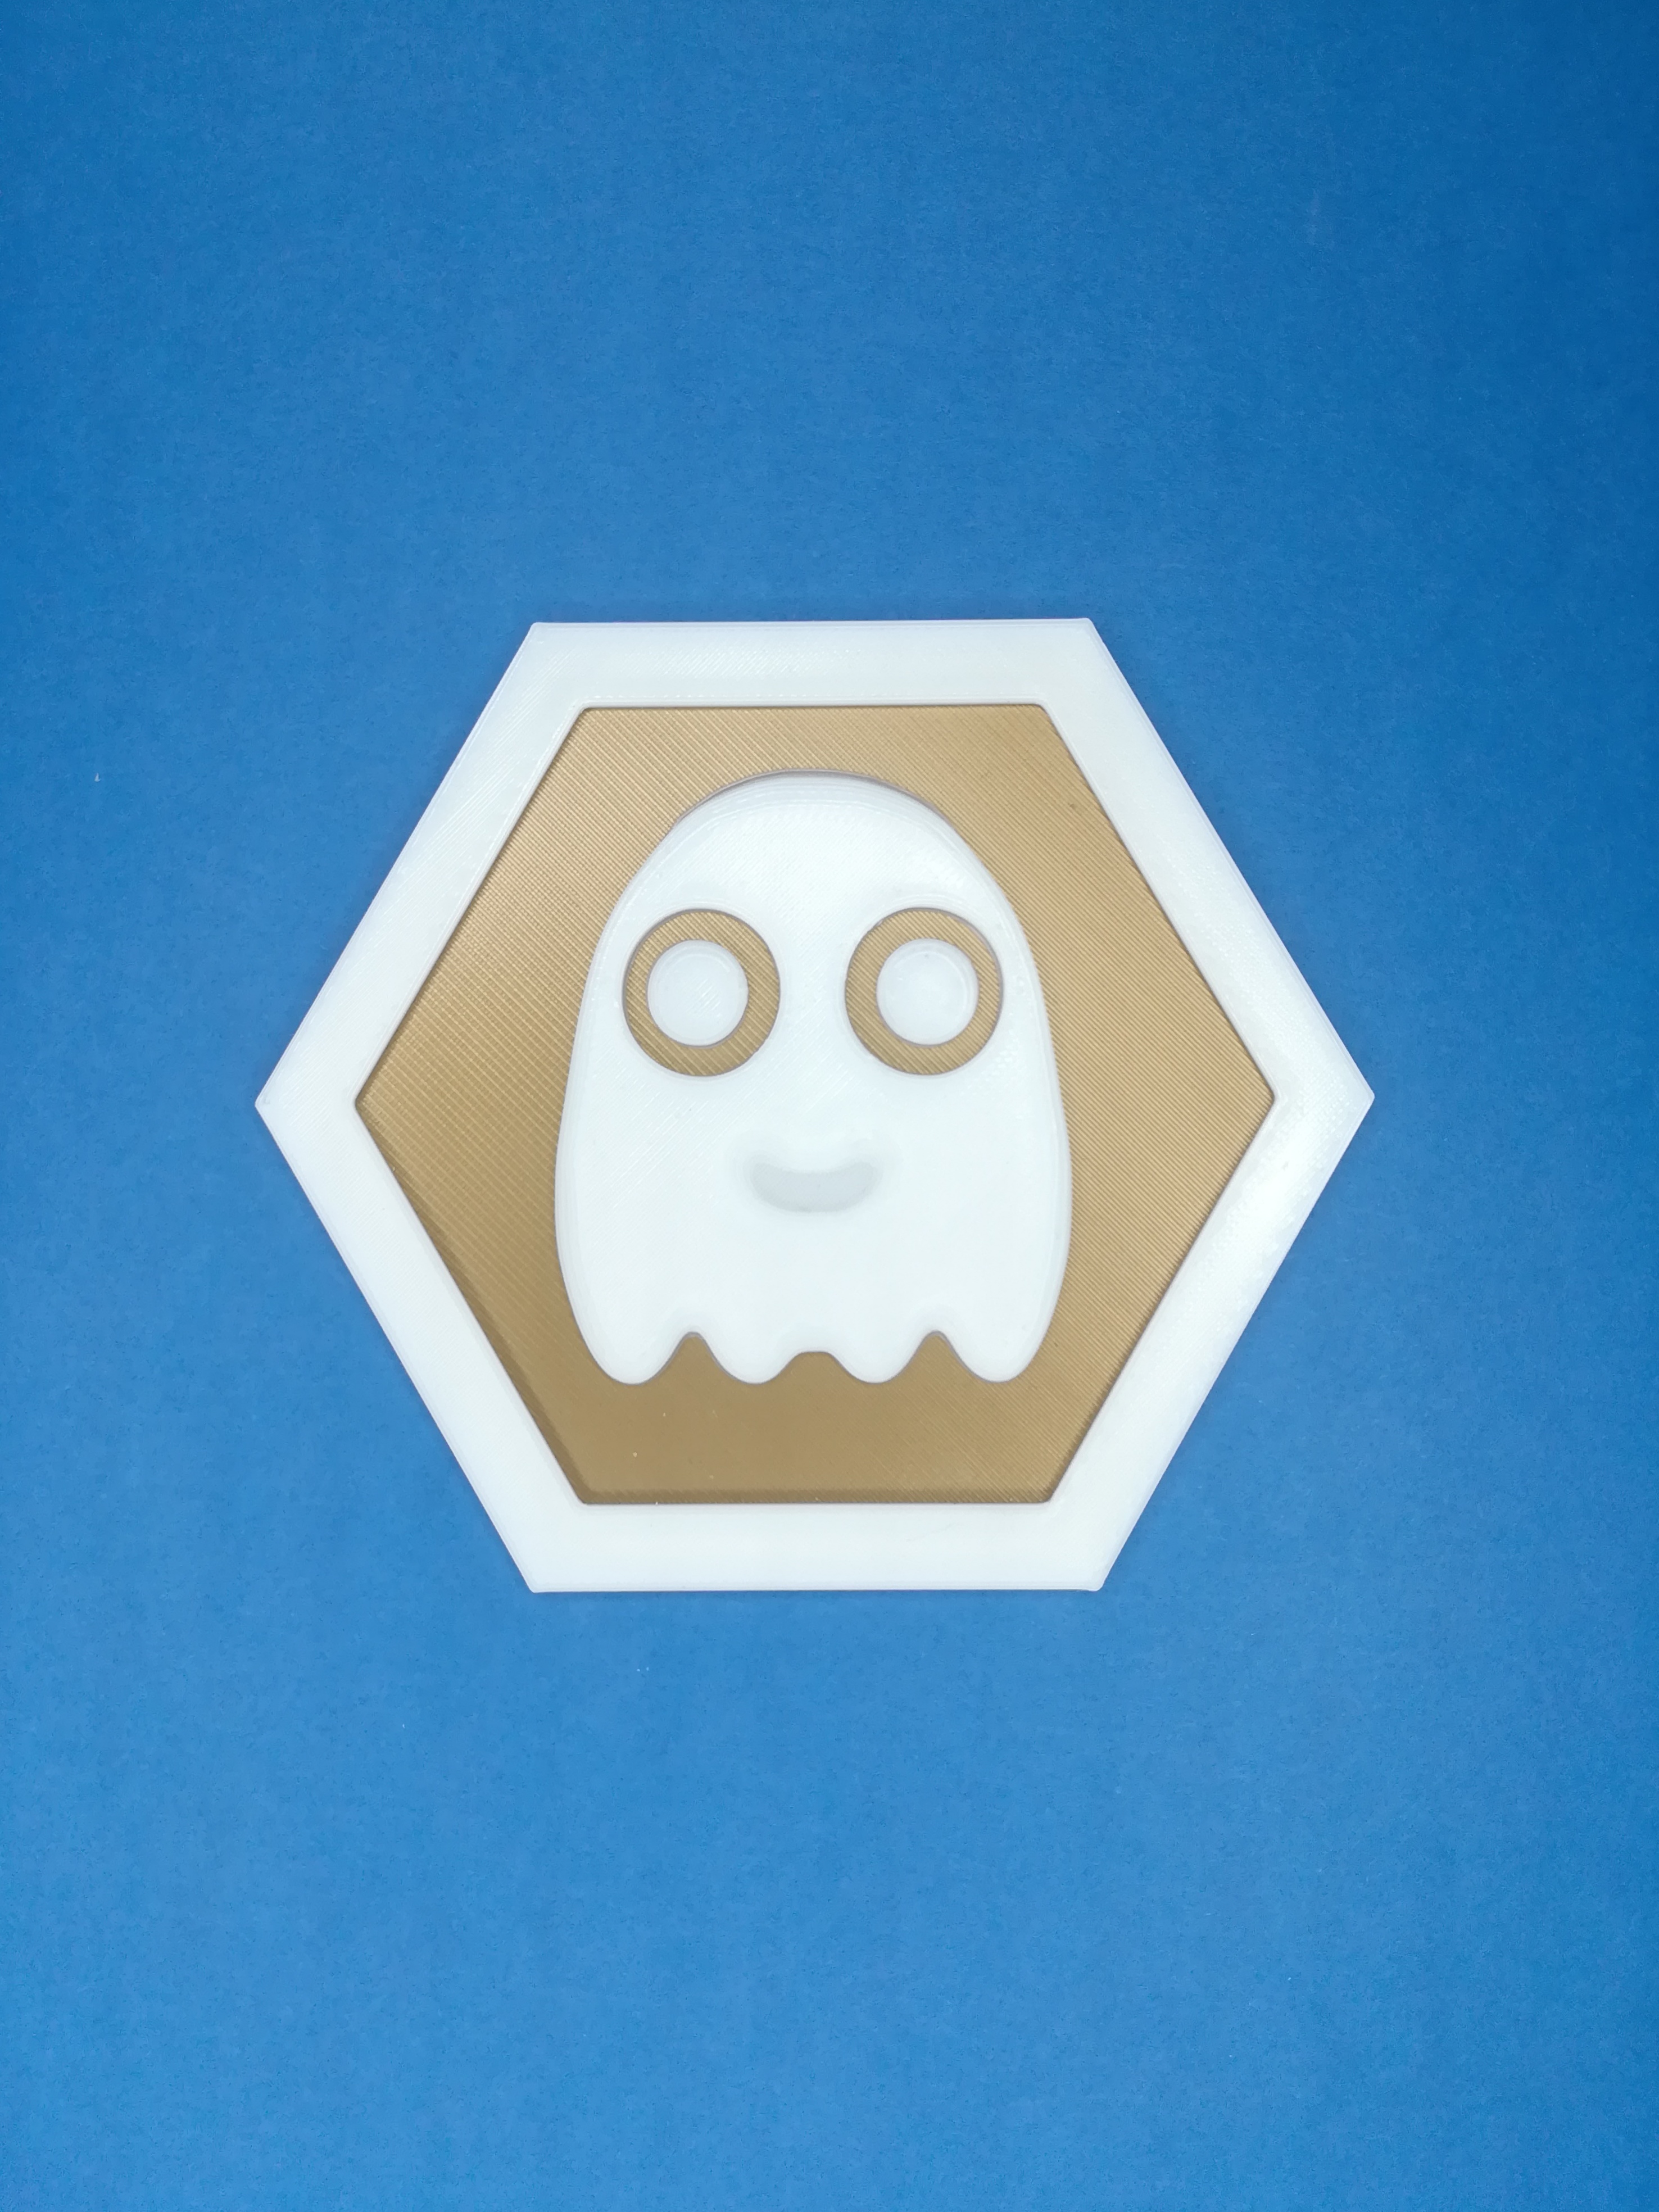 Hexagonal ghost Pacman inspired tile coin logo